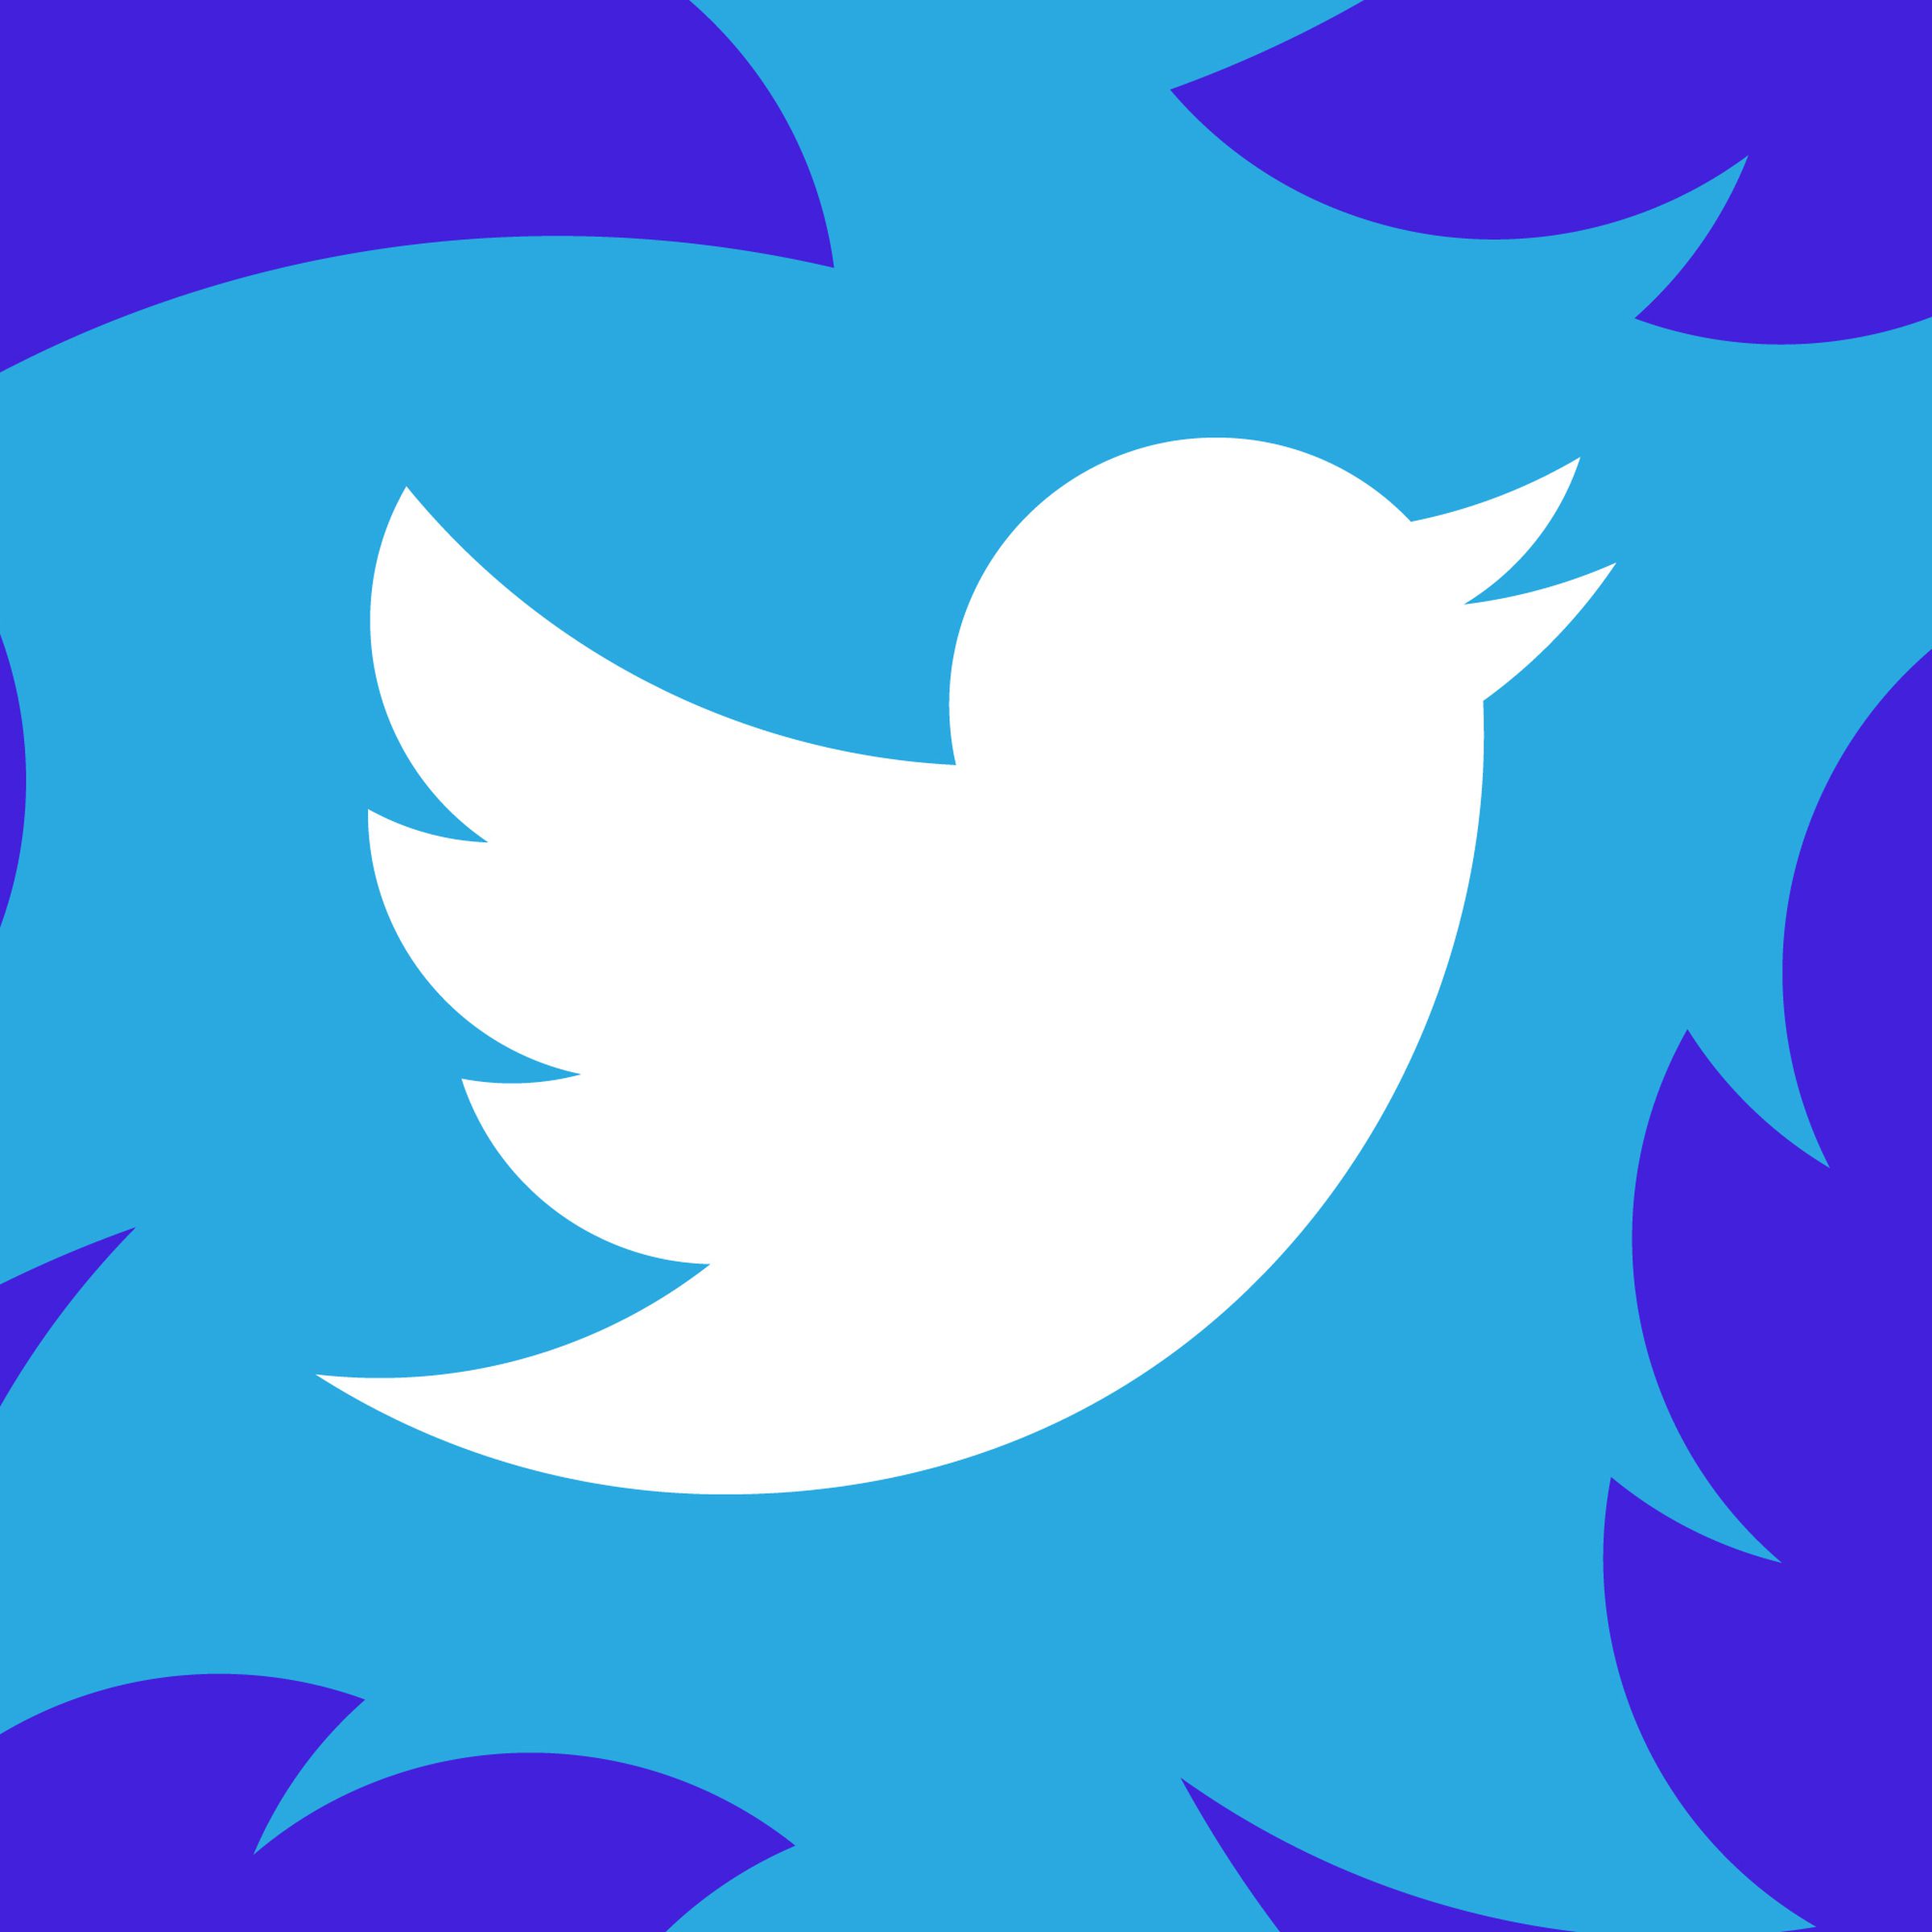 An illustration of the Twitter logo.